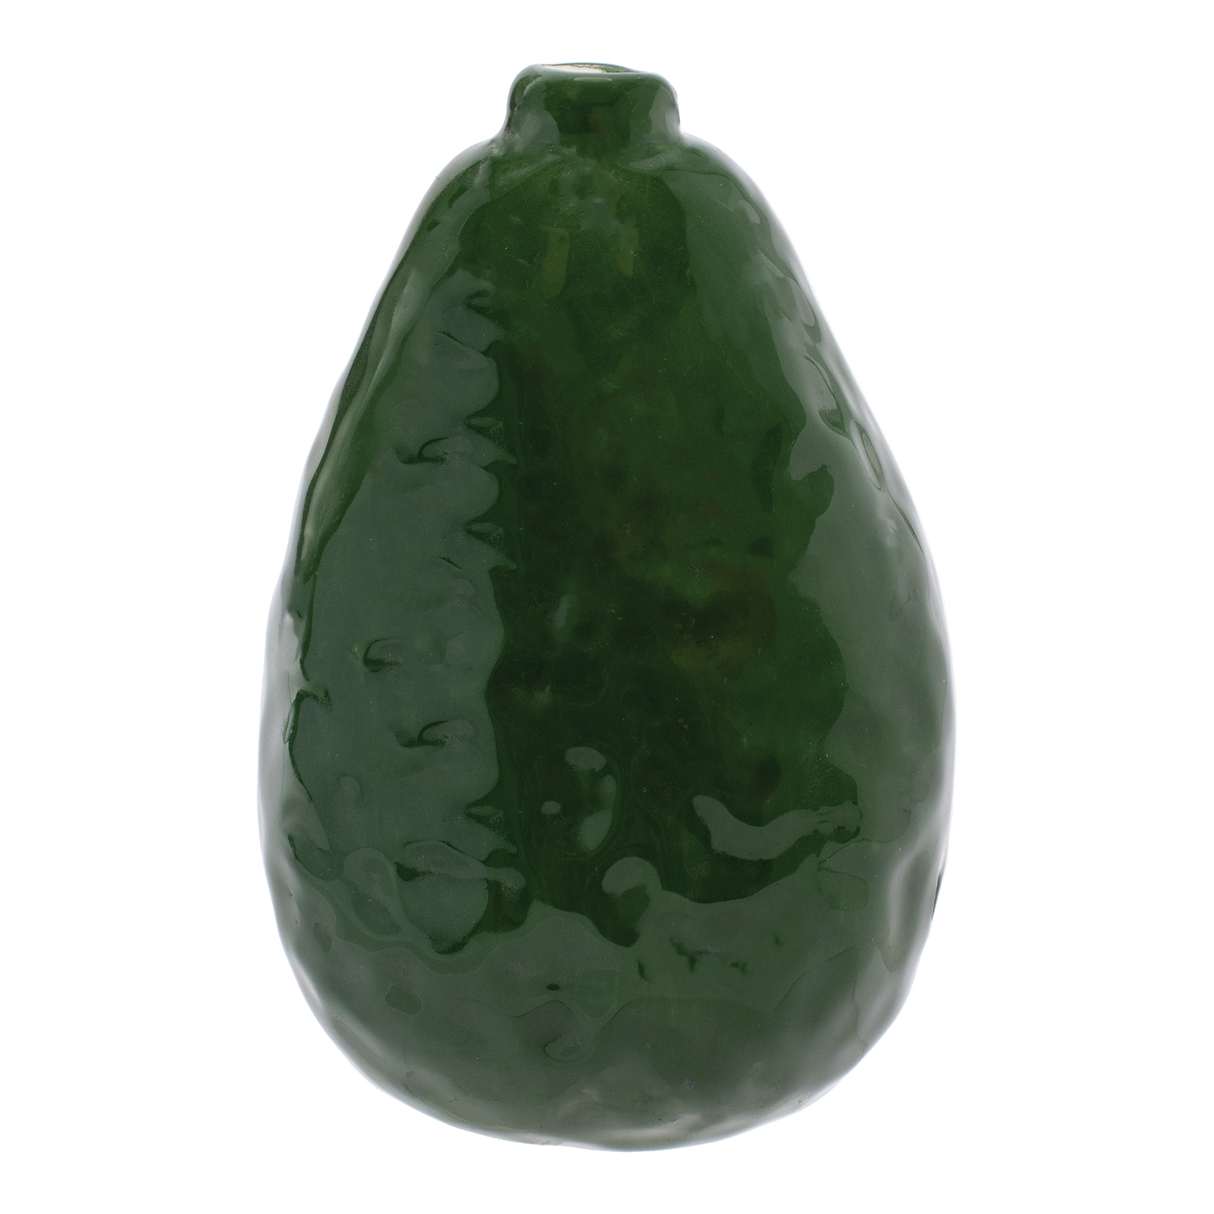 Wacky Bowlz 3.5” Ceramic Pipe – Avocado